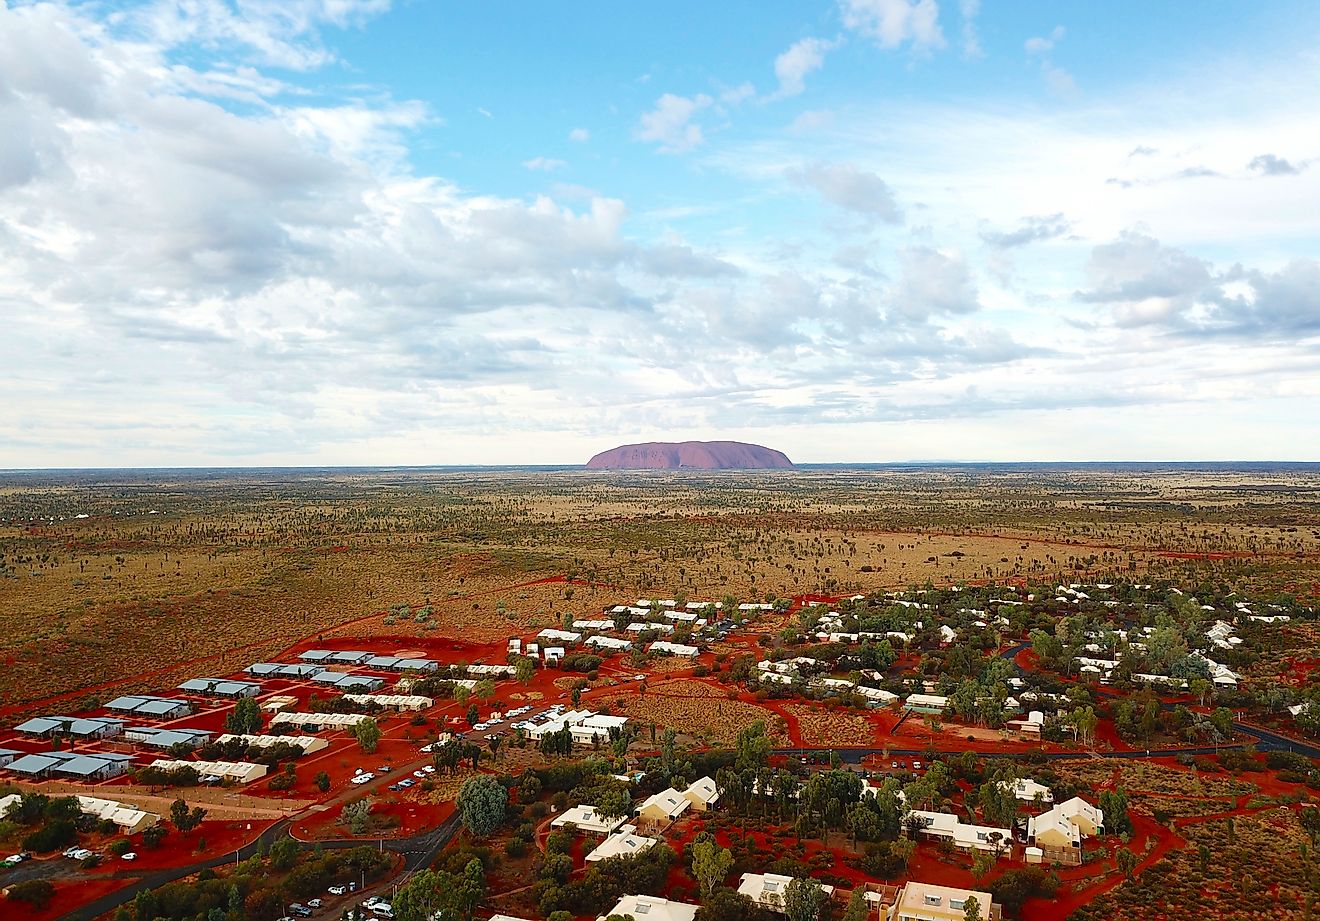 Panoramic landscape of Uluru (Ayers Rock) from Yulara in the Northern Territory state of Australia. Editorial credit: katacarix / Shutterstock.com